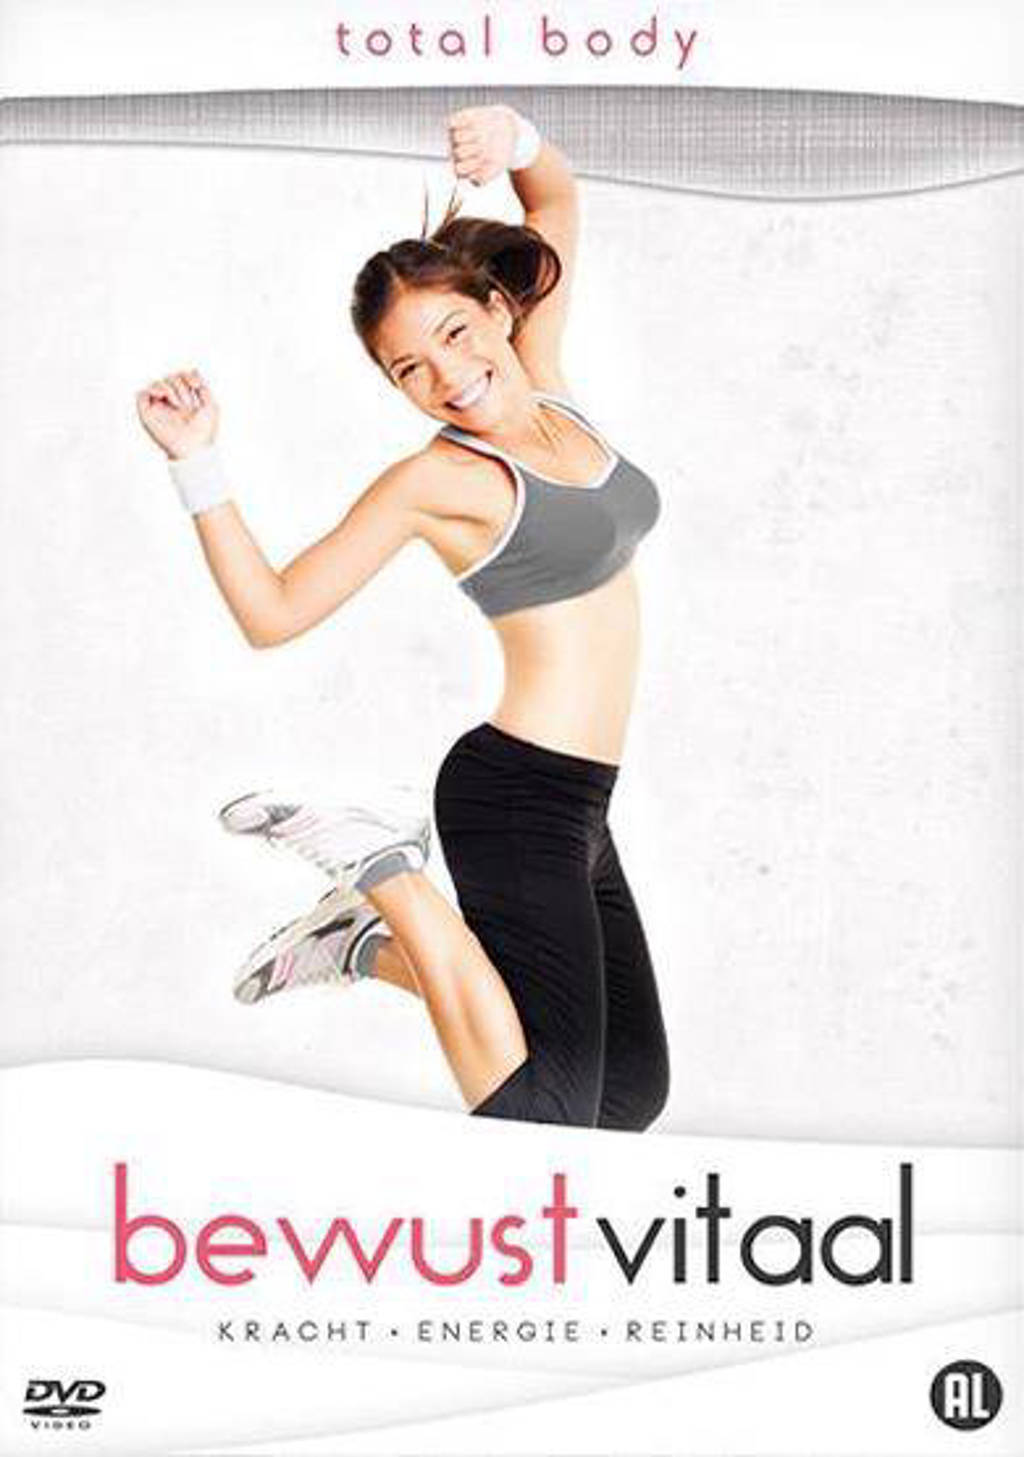 Bewust Vitaal - Total Body (DVD)